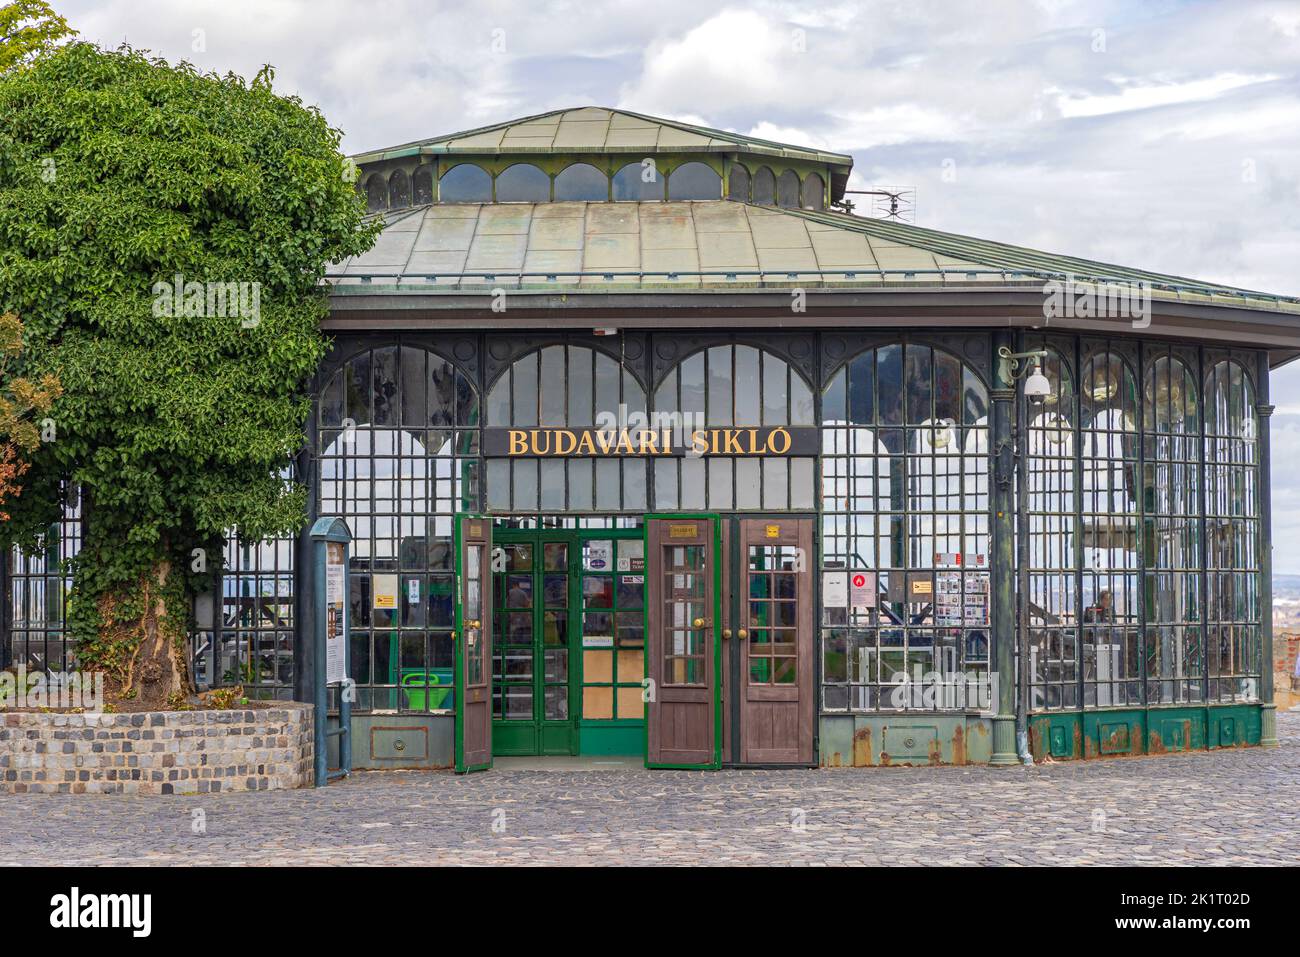 Budapest, Hungary - July 31, 2022: Budavari Siklo Funicular Railway Station at Buda Castle Hill Top. Stock Photo